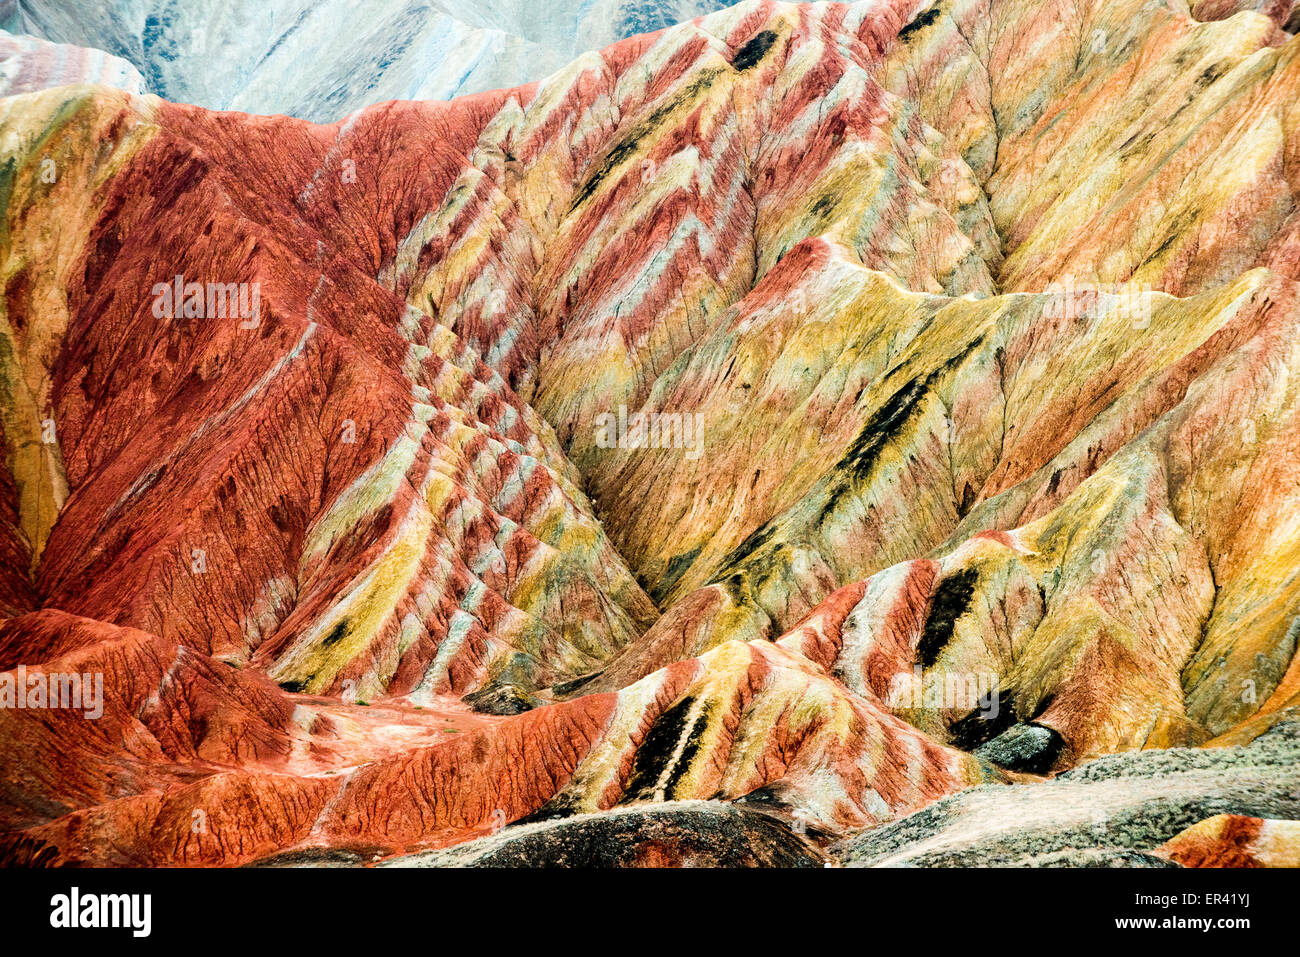 The beautiful Rainbow mountains at the Zhangye Danxia landform geological park in Gansu. Stock Photo